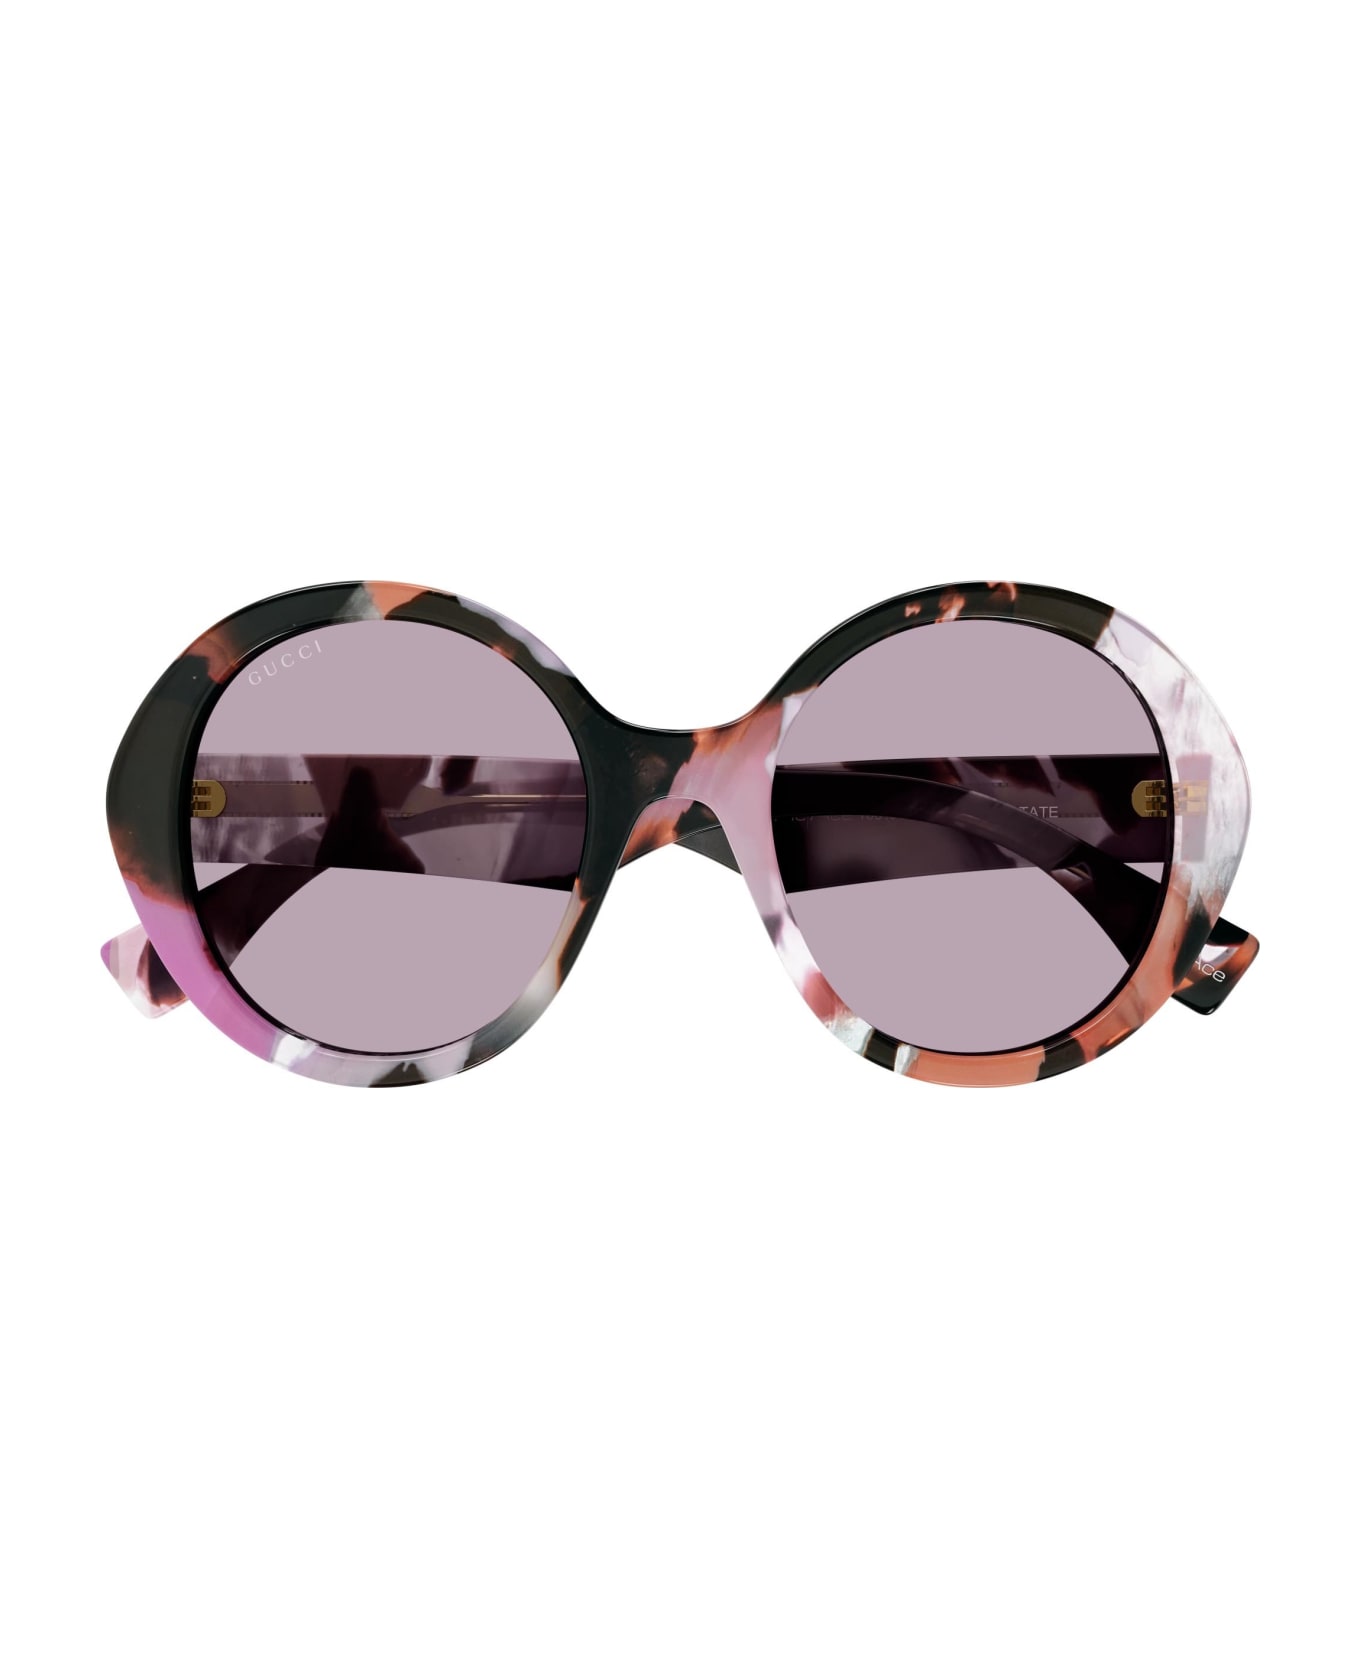 Gucci Eyewear Sunglasses - Rosa/Viola chiaro サングラス